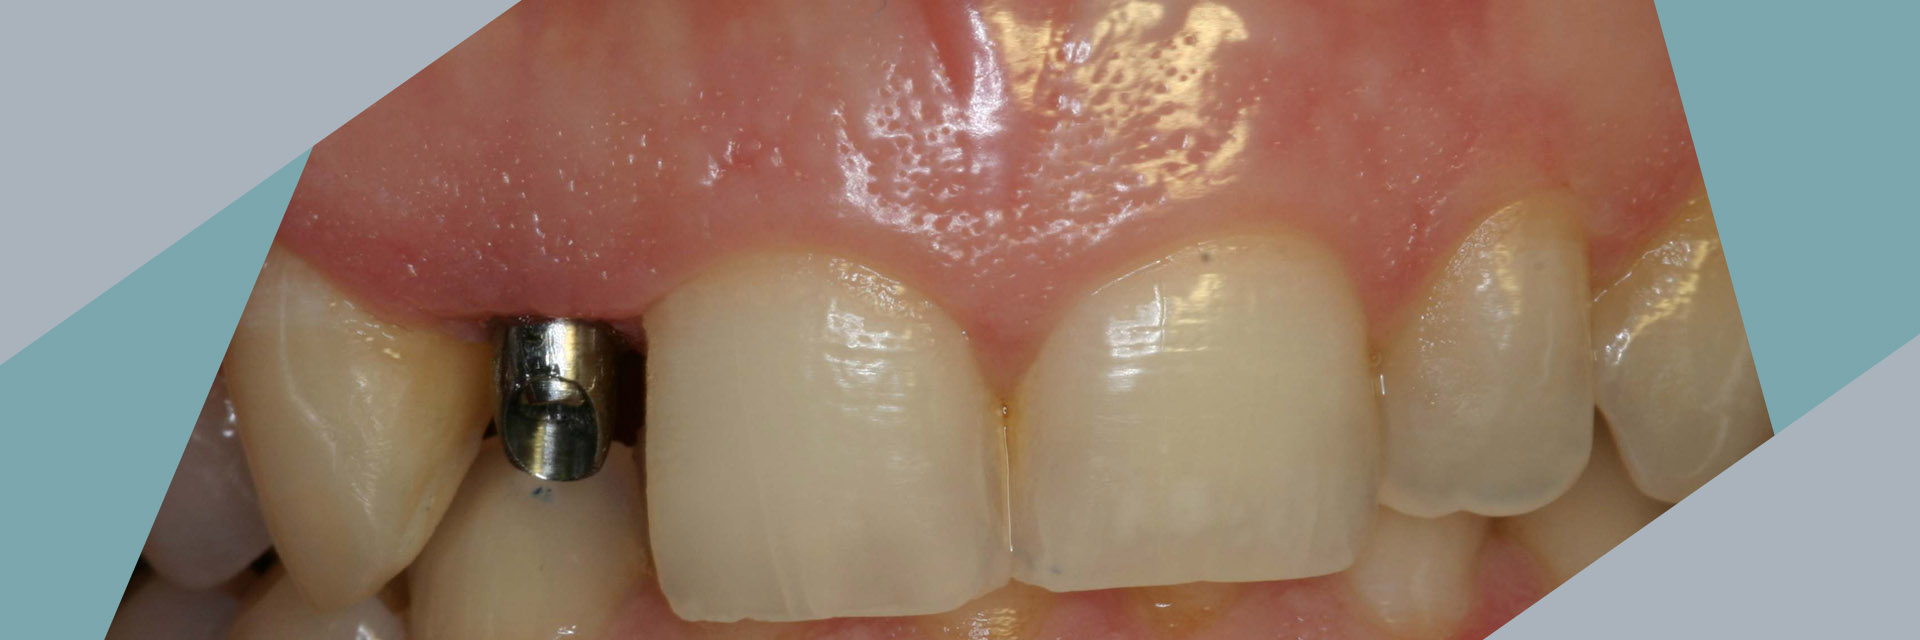 queensboro-dental-implants-flushing-ny-abutment-implant-Slider-01_01